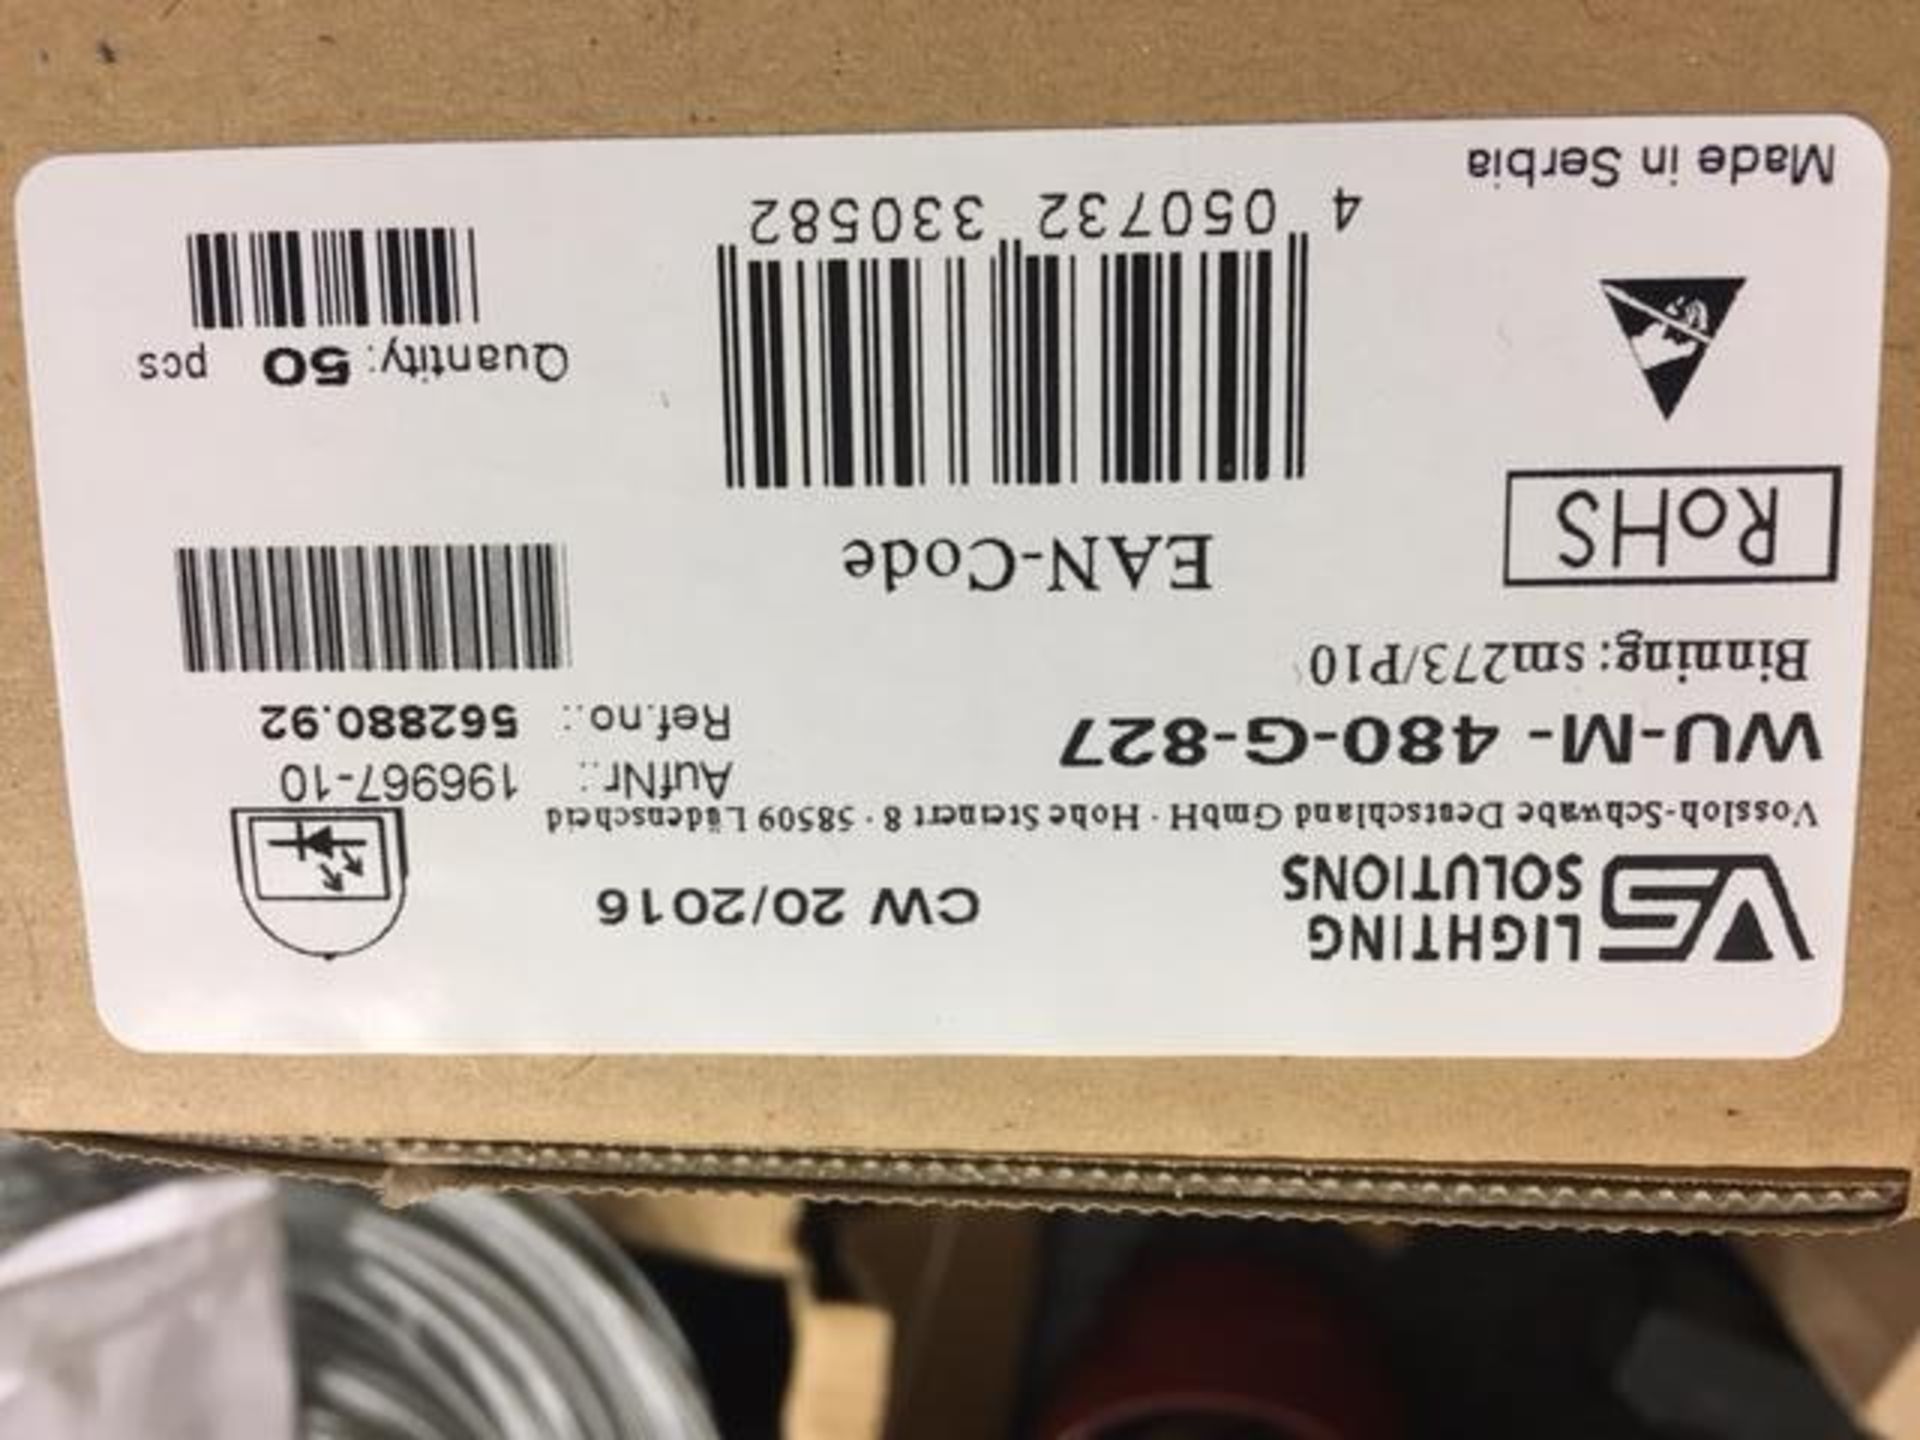 50 X VOSSLOH-SCHWABE LED BOARDS wu-m480-g-827 brand new same batch number no vat on lots